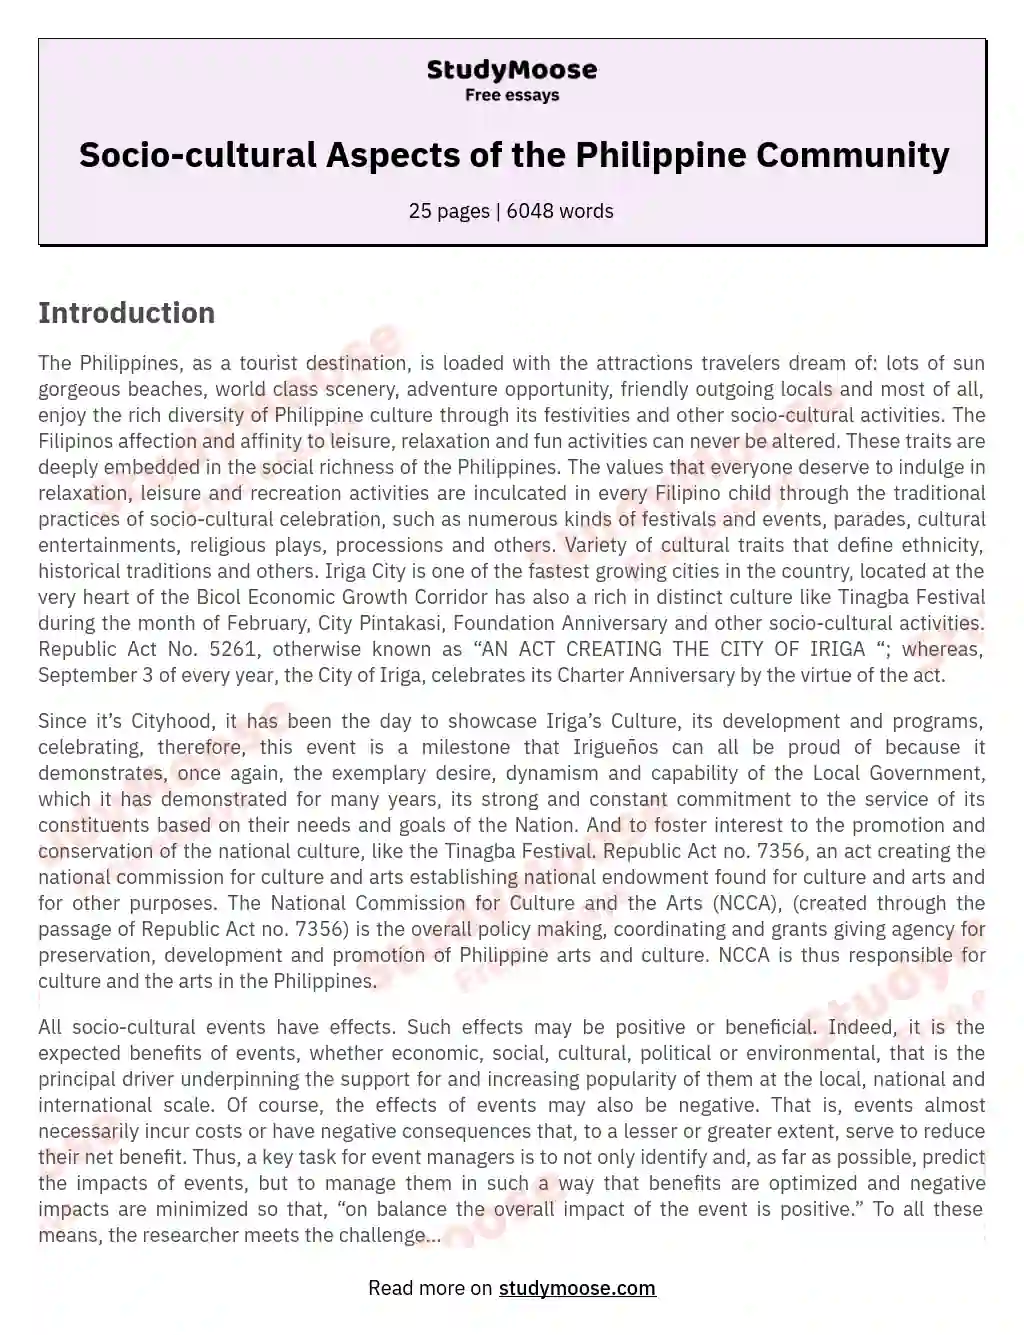 Socio-cultural Aspects of the Philippine Community essay